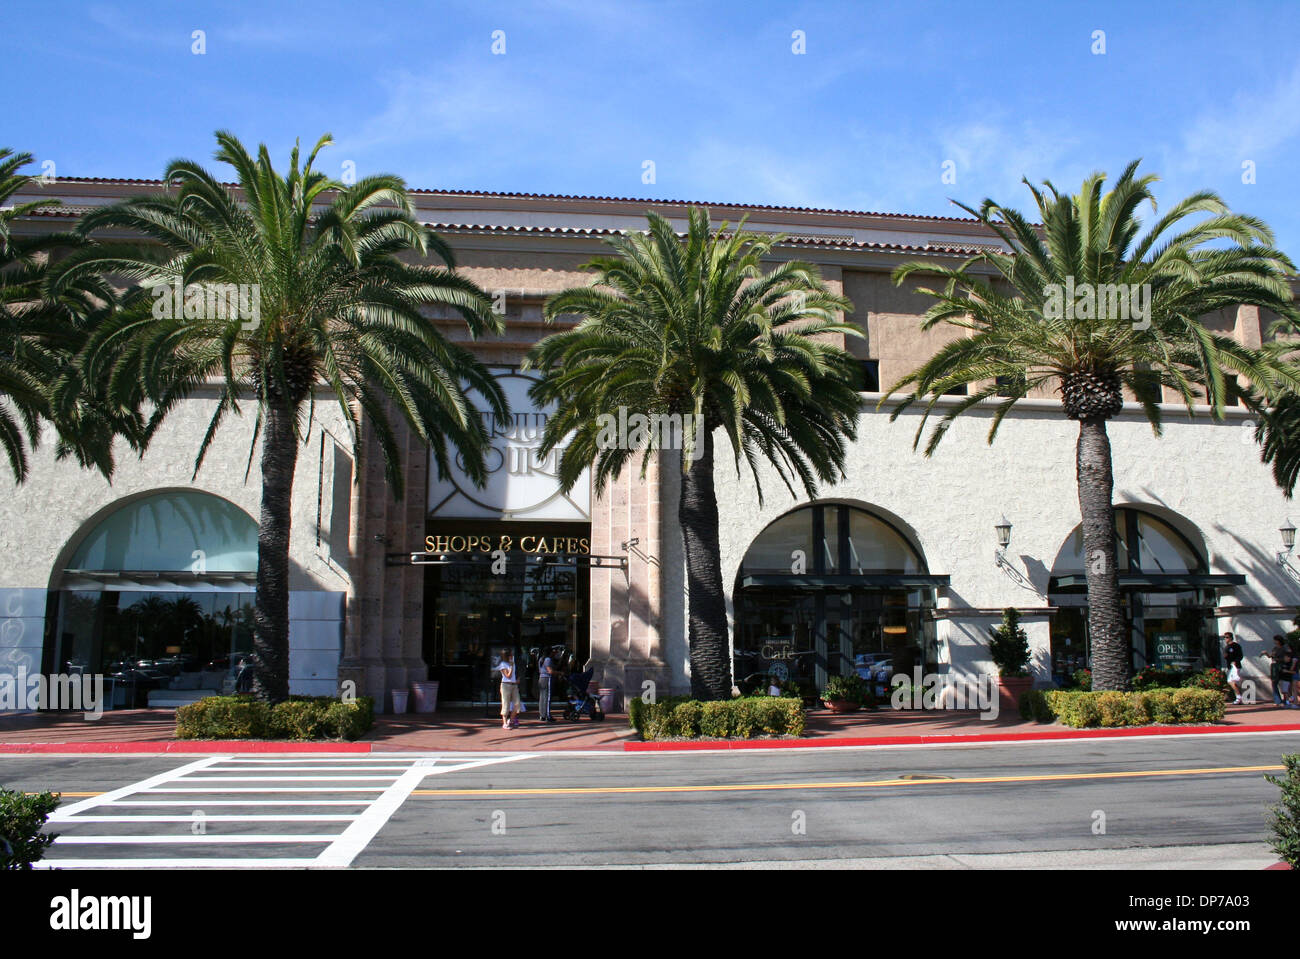 File:Perfect Day in Fashion Island, Newport Center, Newport Beach, Ca, USA  - panoramio (19).jpg - Wikimedia Commons